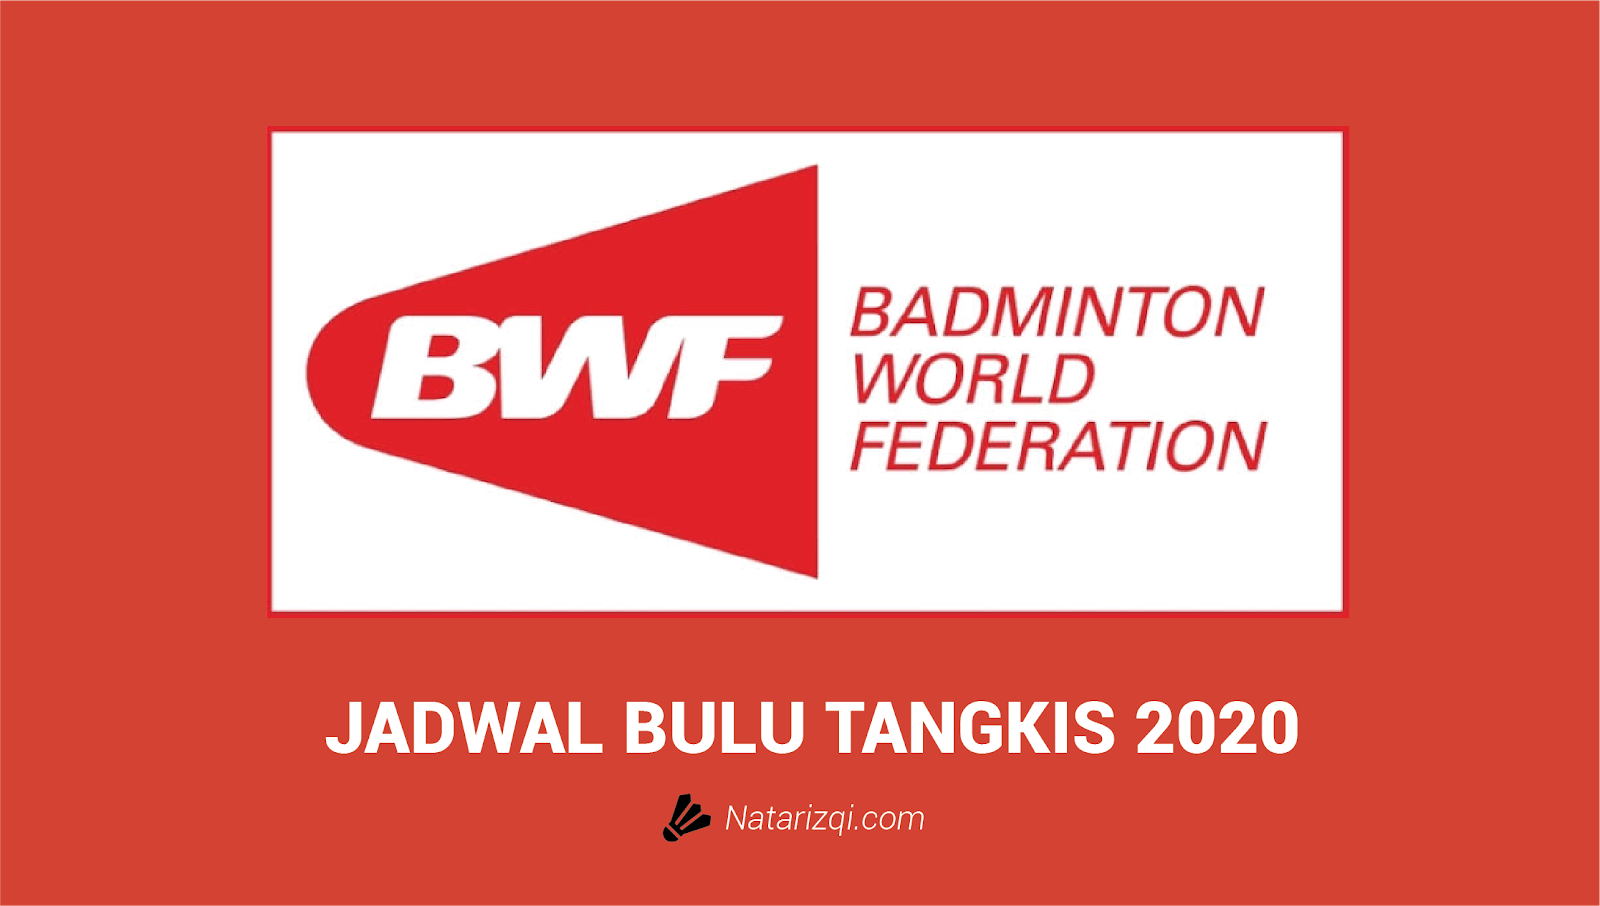 Всемирная федерация бадминтона. BWF. Badminton World Federation. EKF логотип.